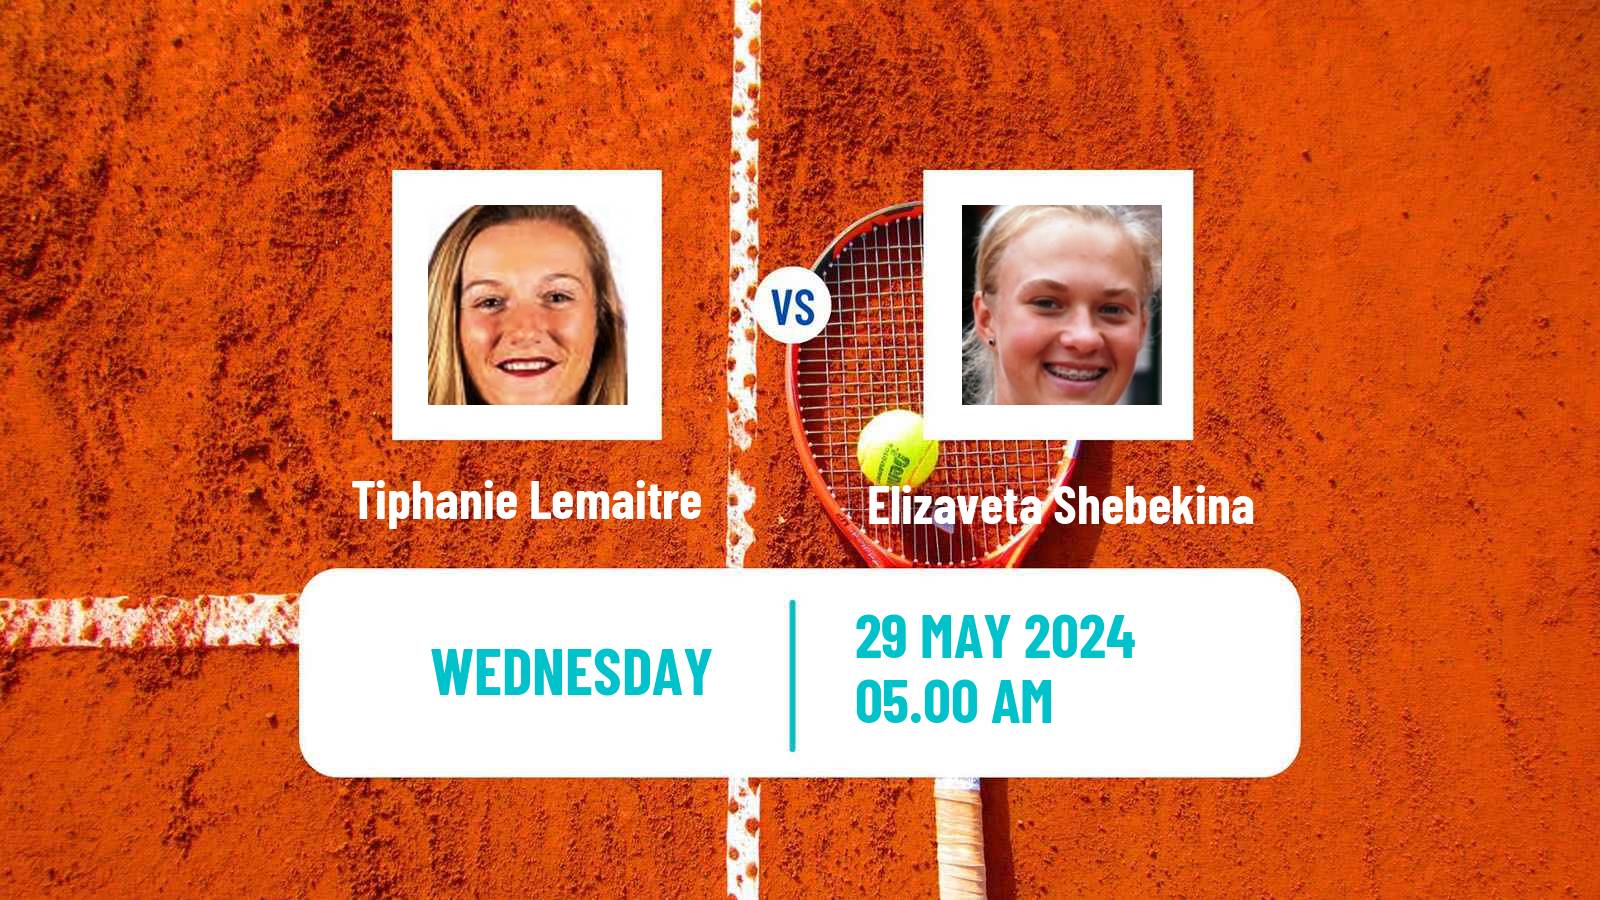 Tennis ITF W35 La Marsa Women Tiphanie Lemaitre - Elizaveta Shebekina